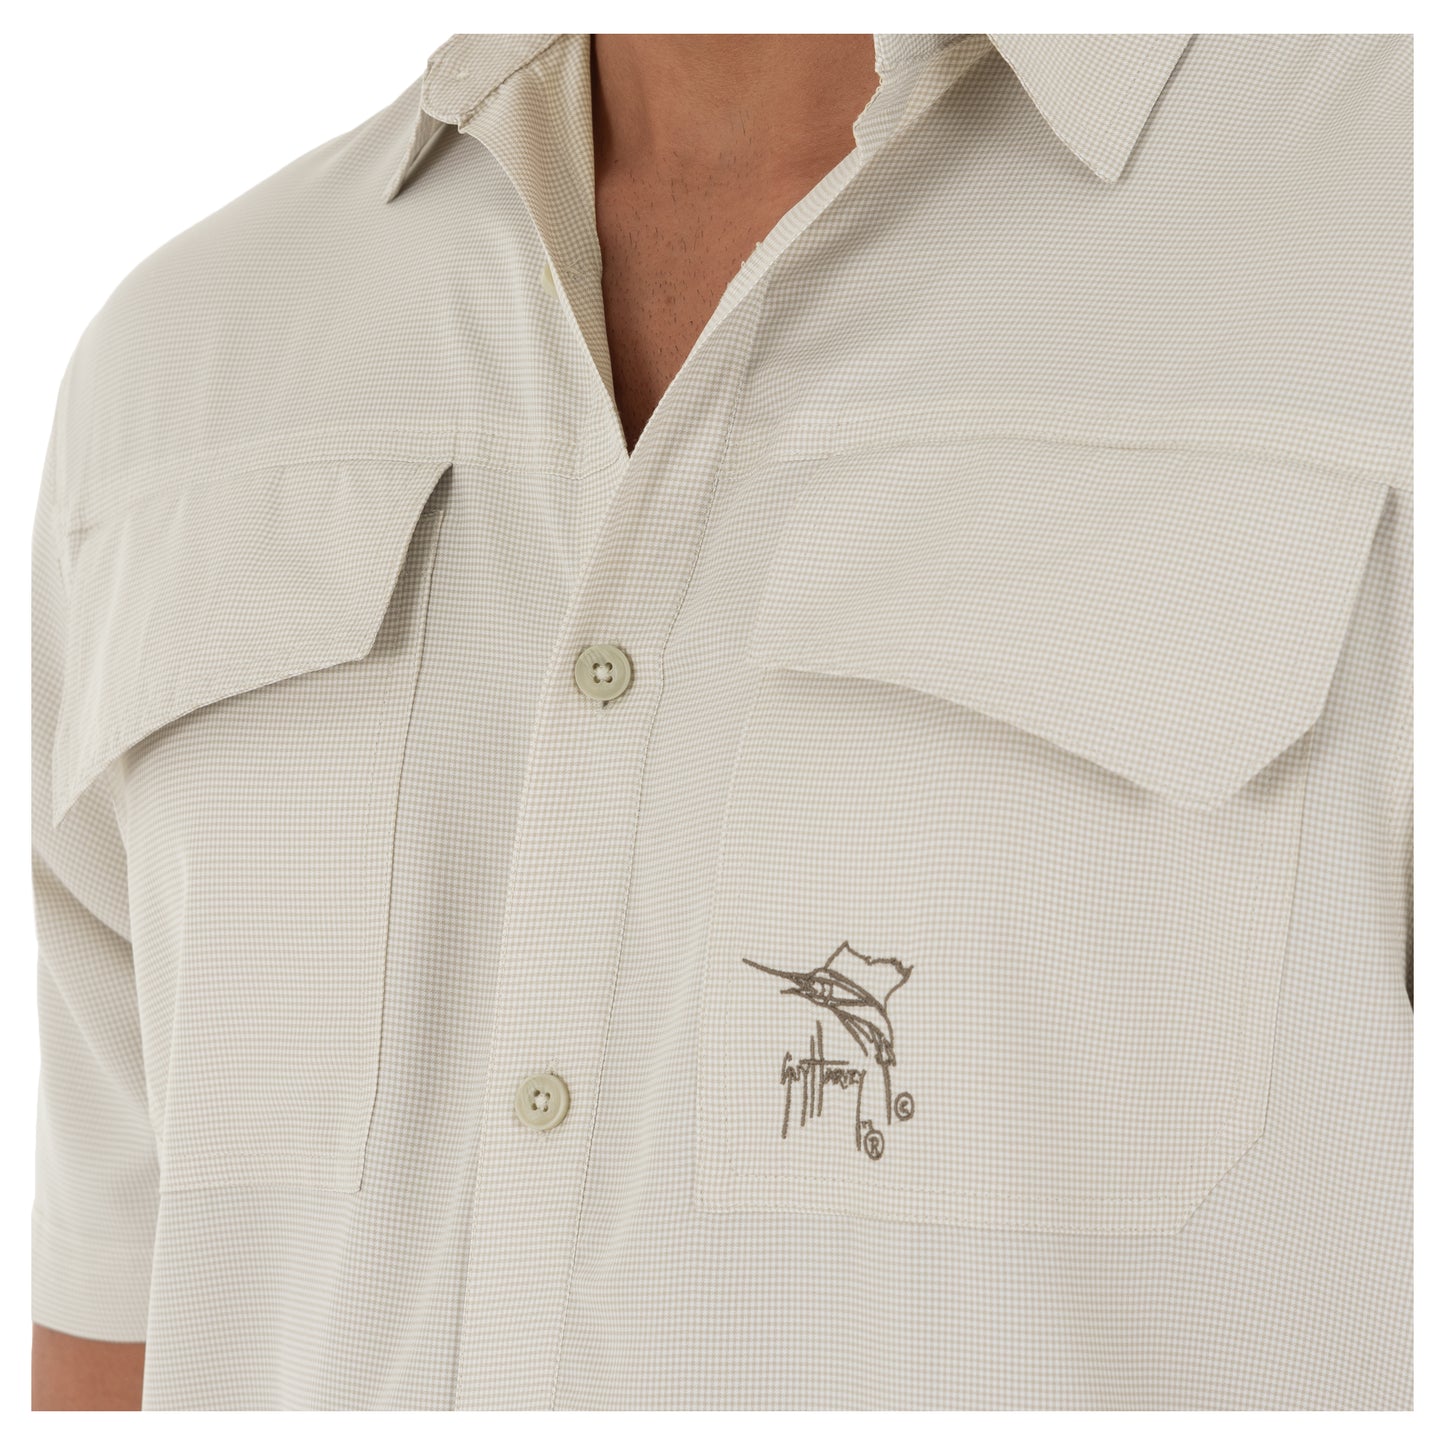 Men's Short Sleeve Texture Gingham Khaki Performance Fishing Shirt